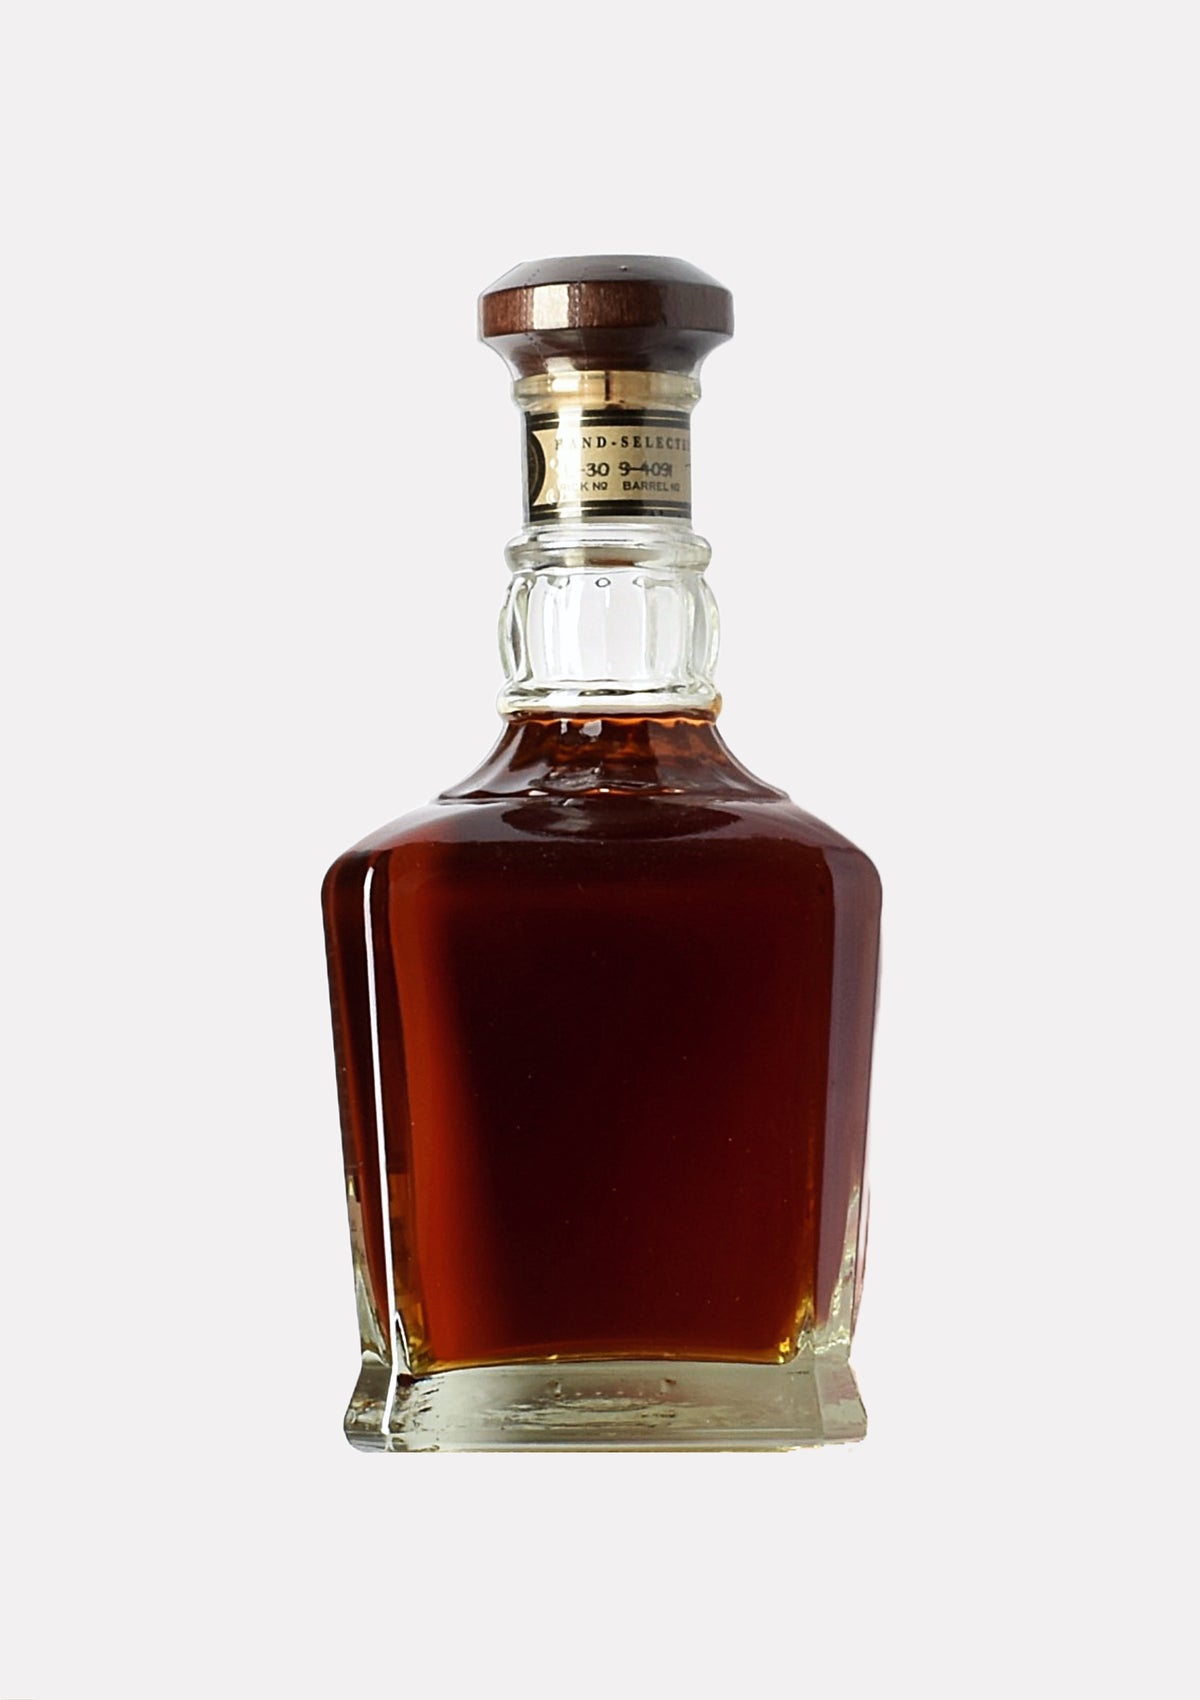 Jack Daniel`s Single Barrel Select Tennessee Whiskey 45 Vol.